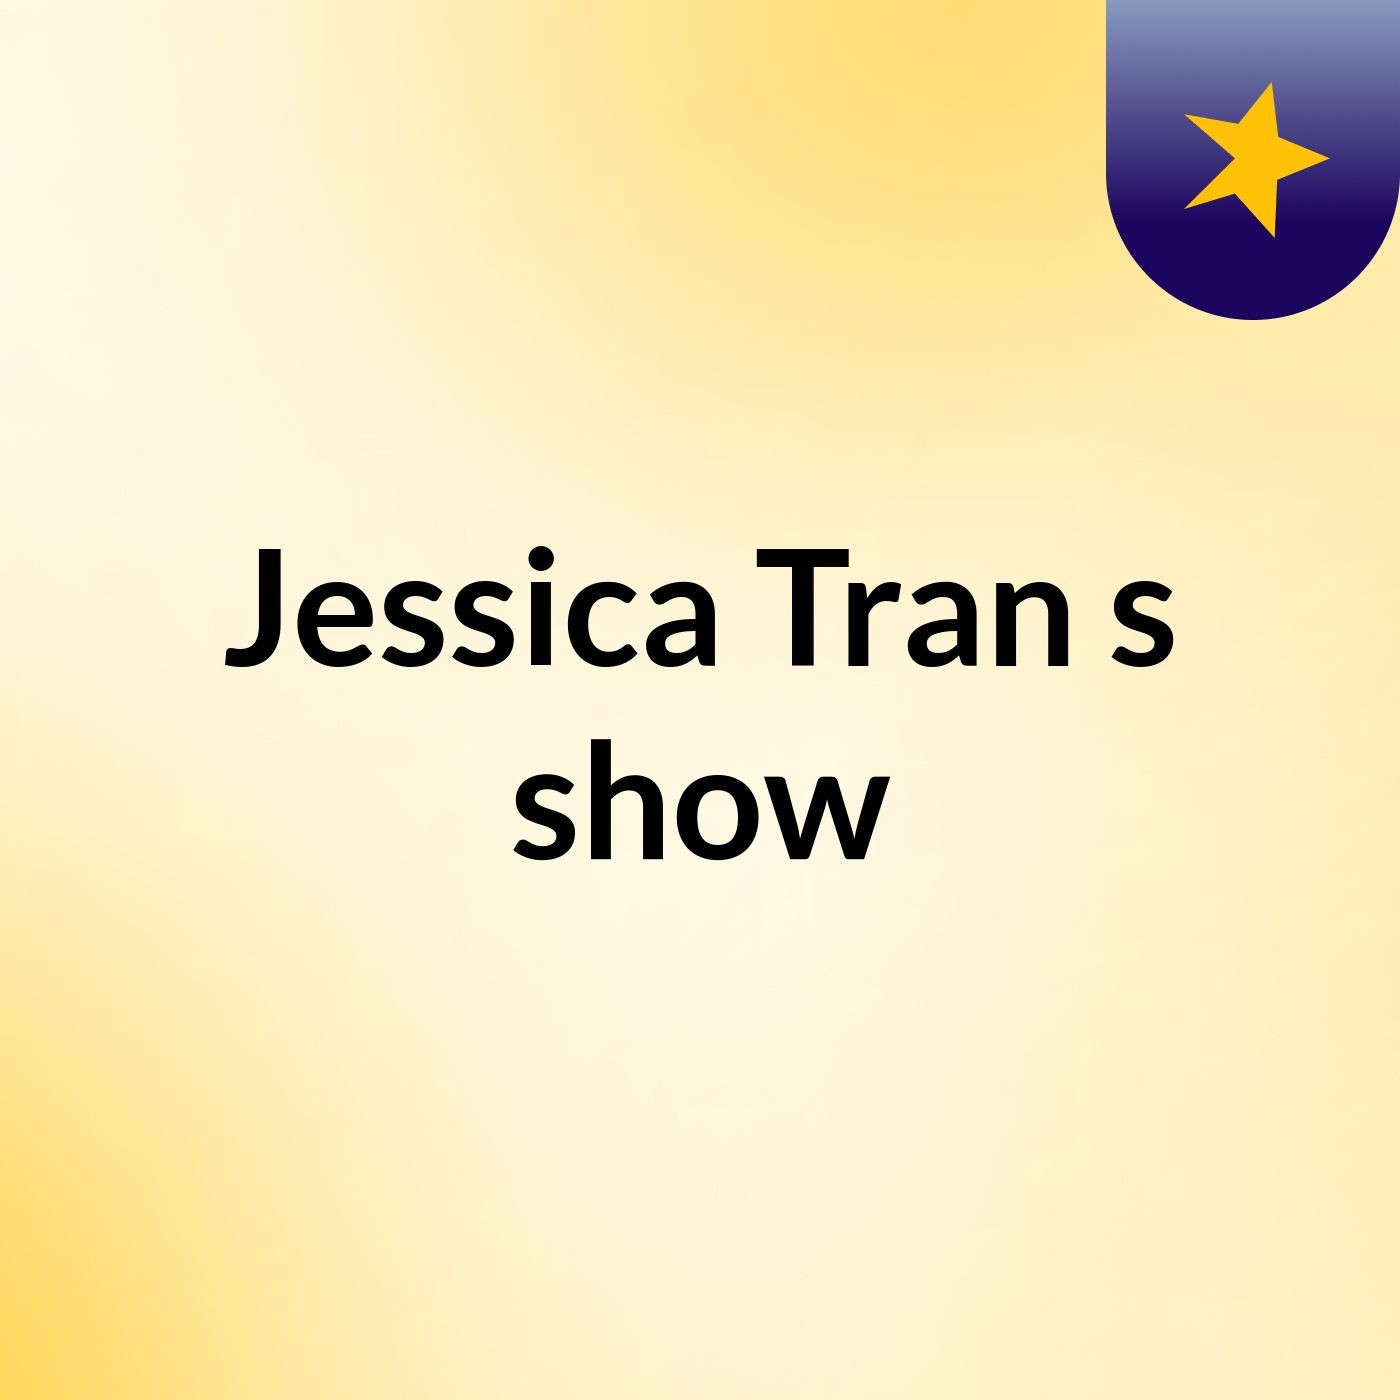 Jessica Tran's show